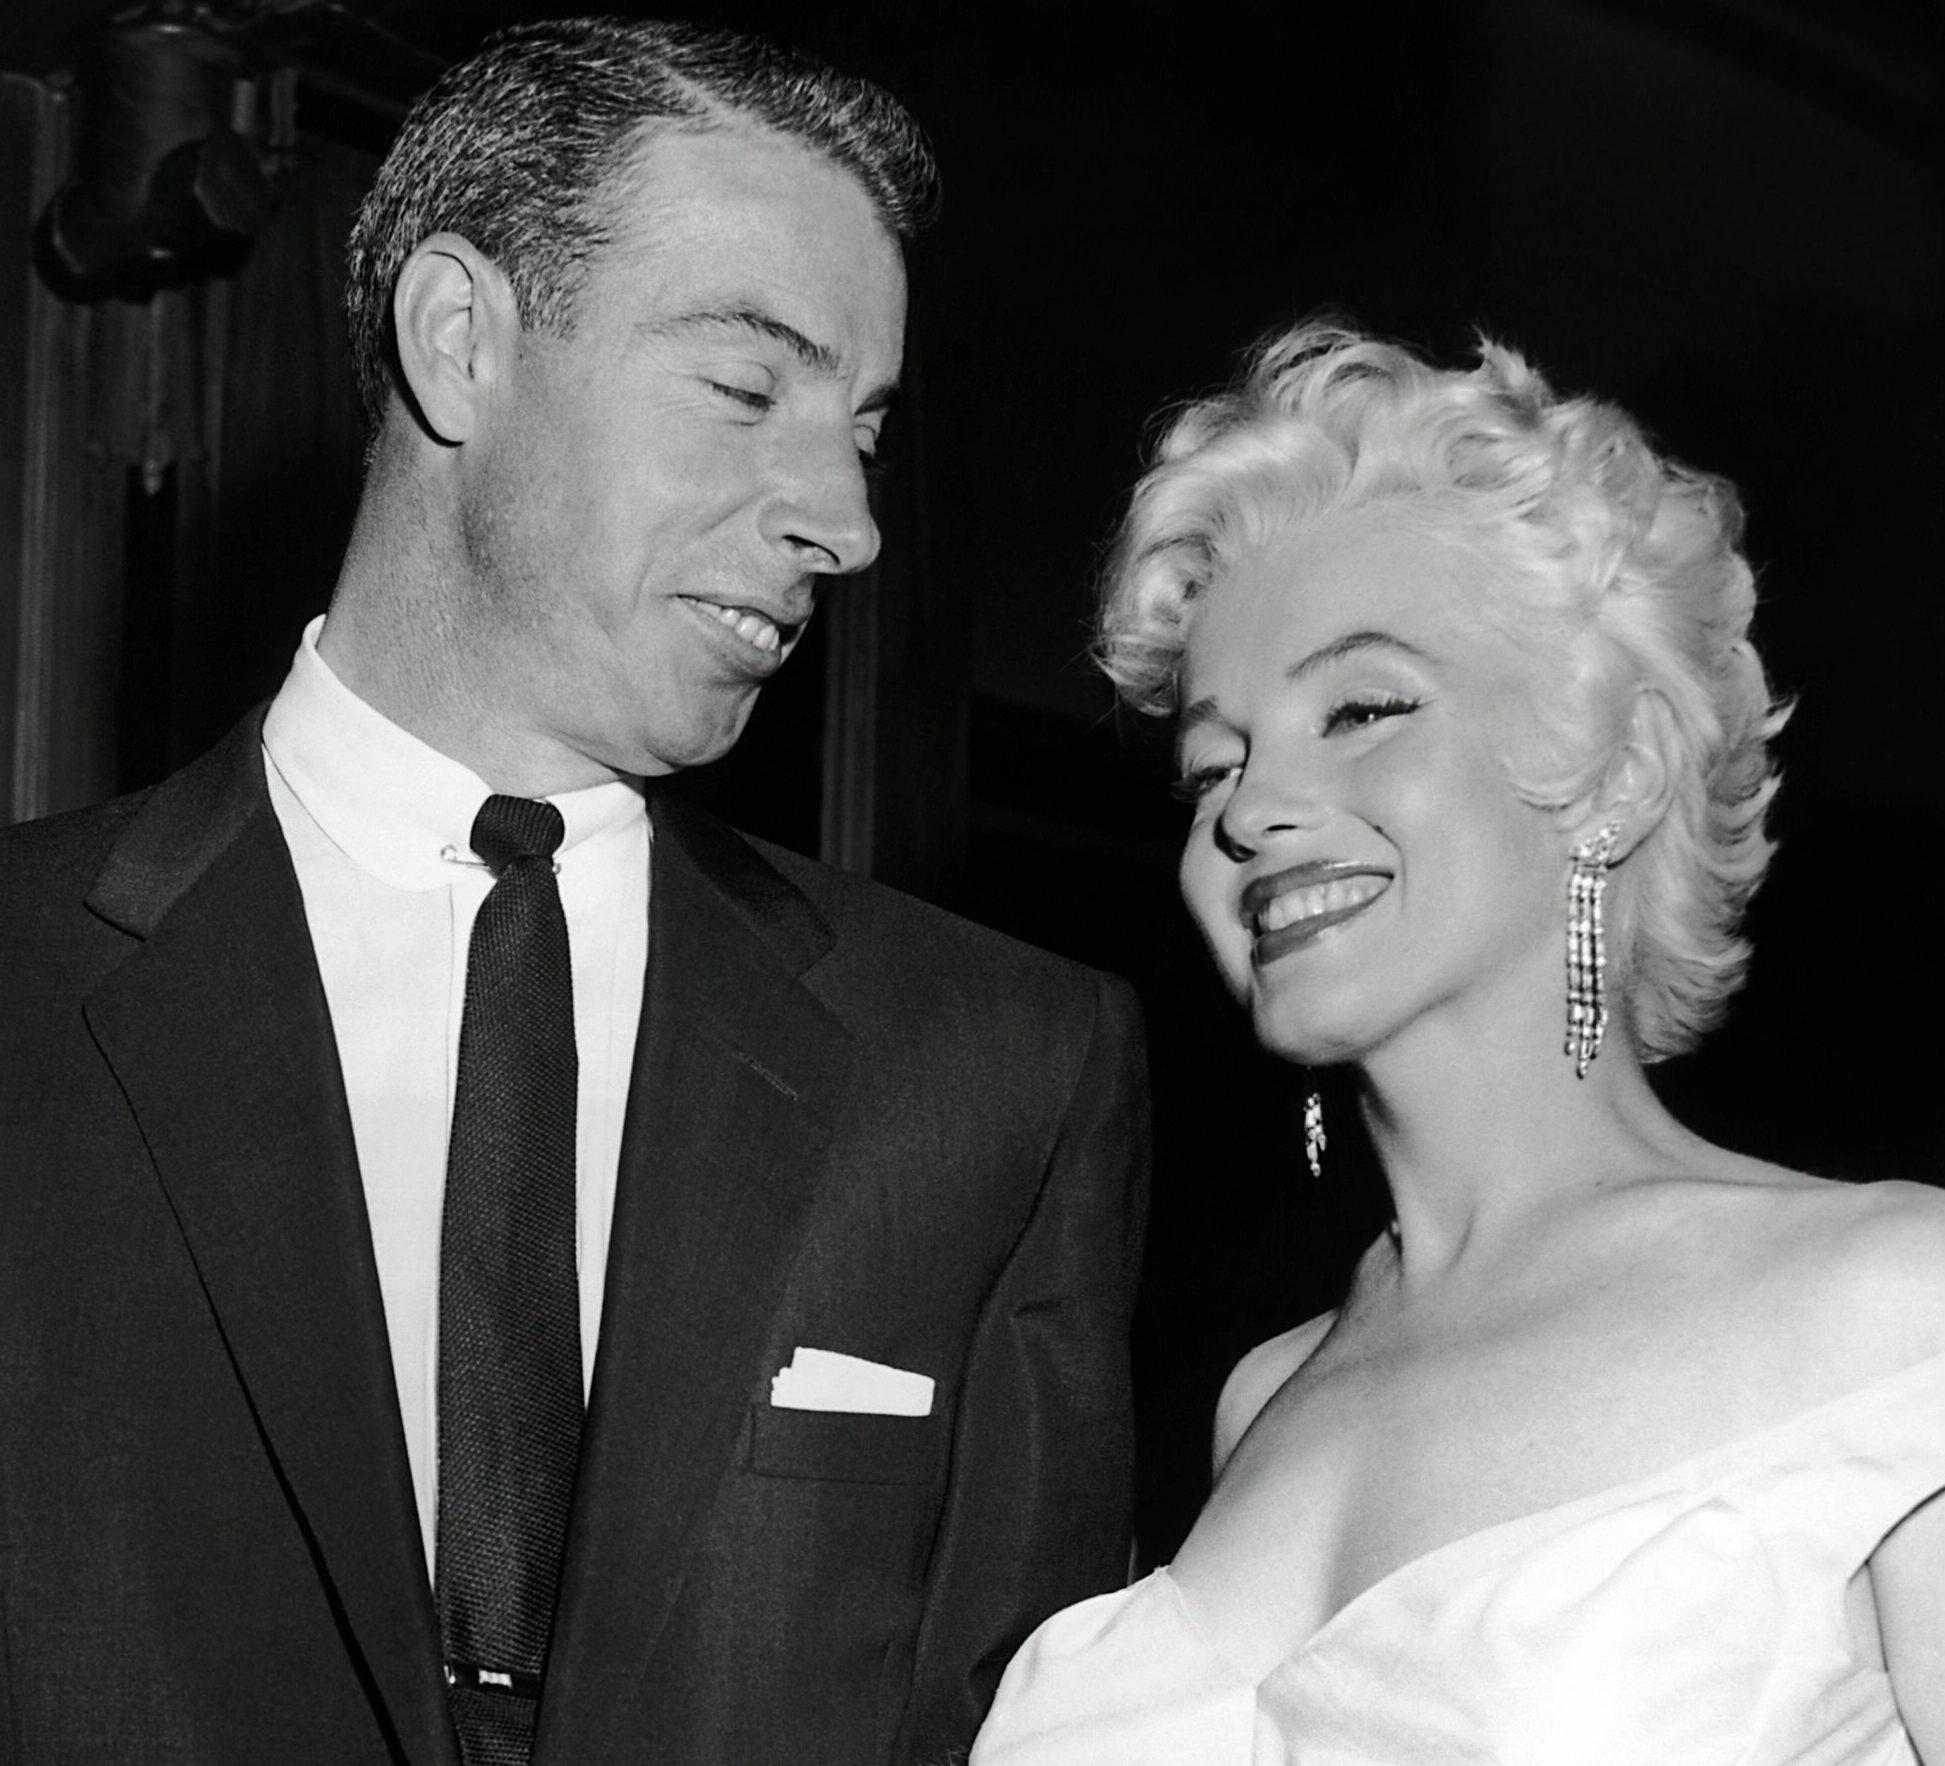 Joe DiMaggio and Marilyn Monroe 